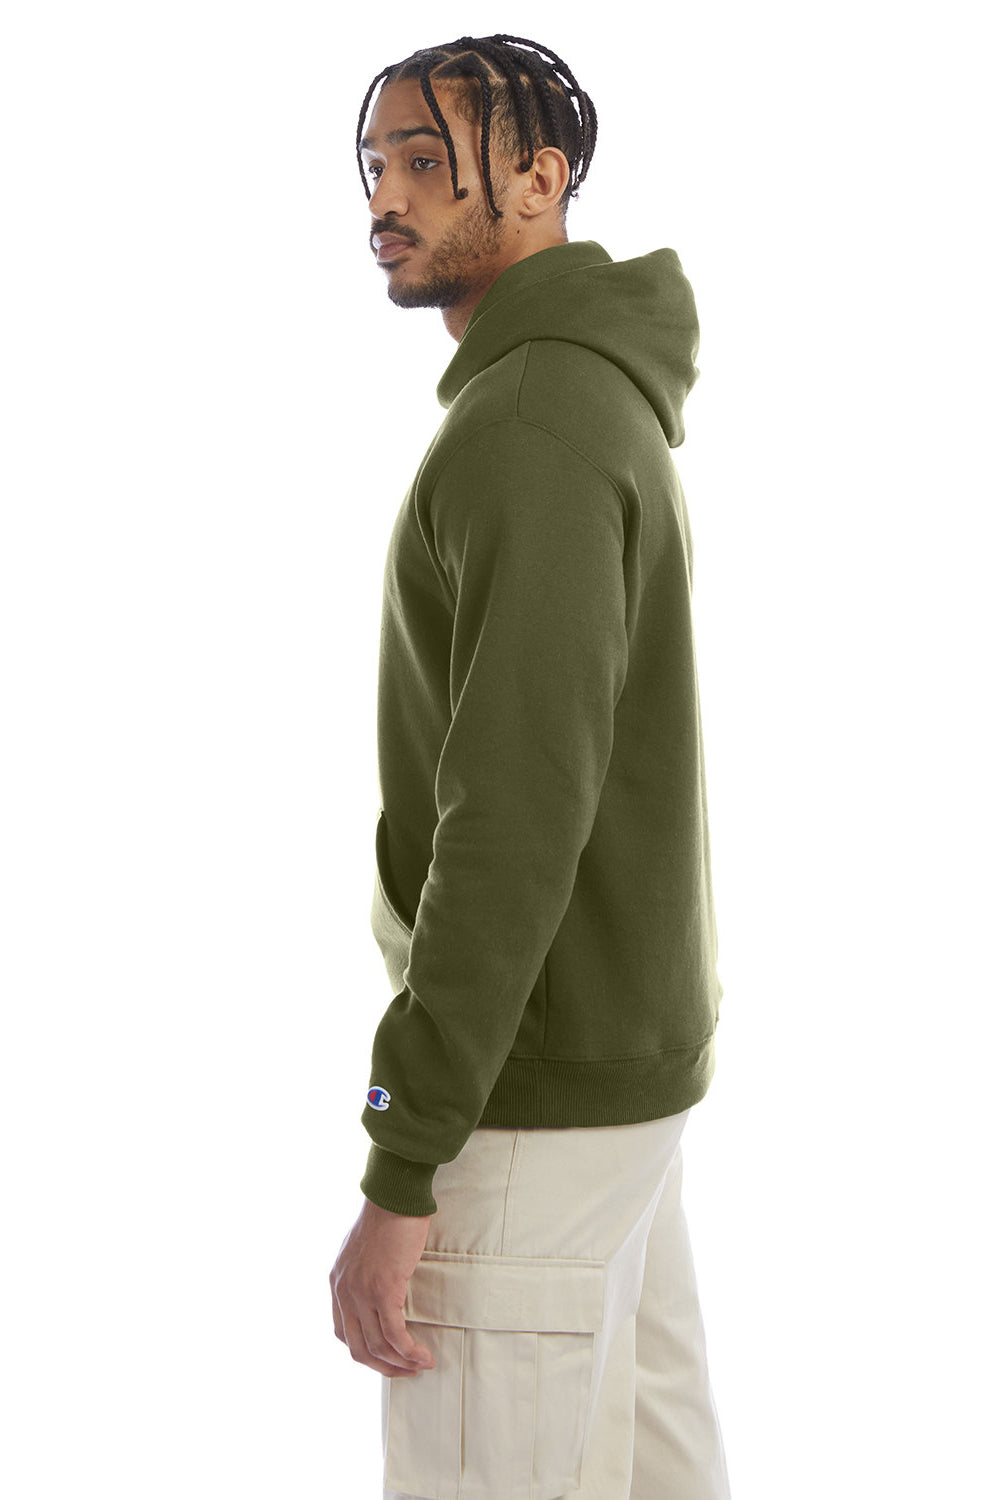 Hoodie Green Fleece — Mens Sweatshirt S700 Champion Olive Double Hooded Wicking Eco Dry Fresh Moisture